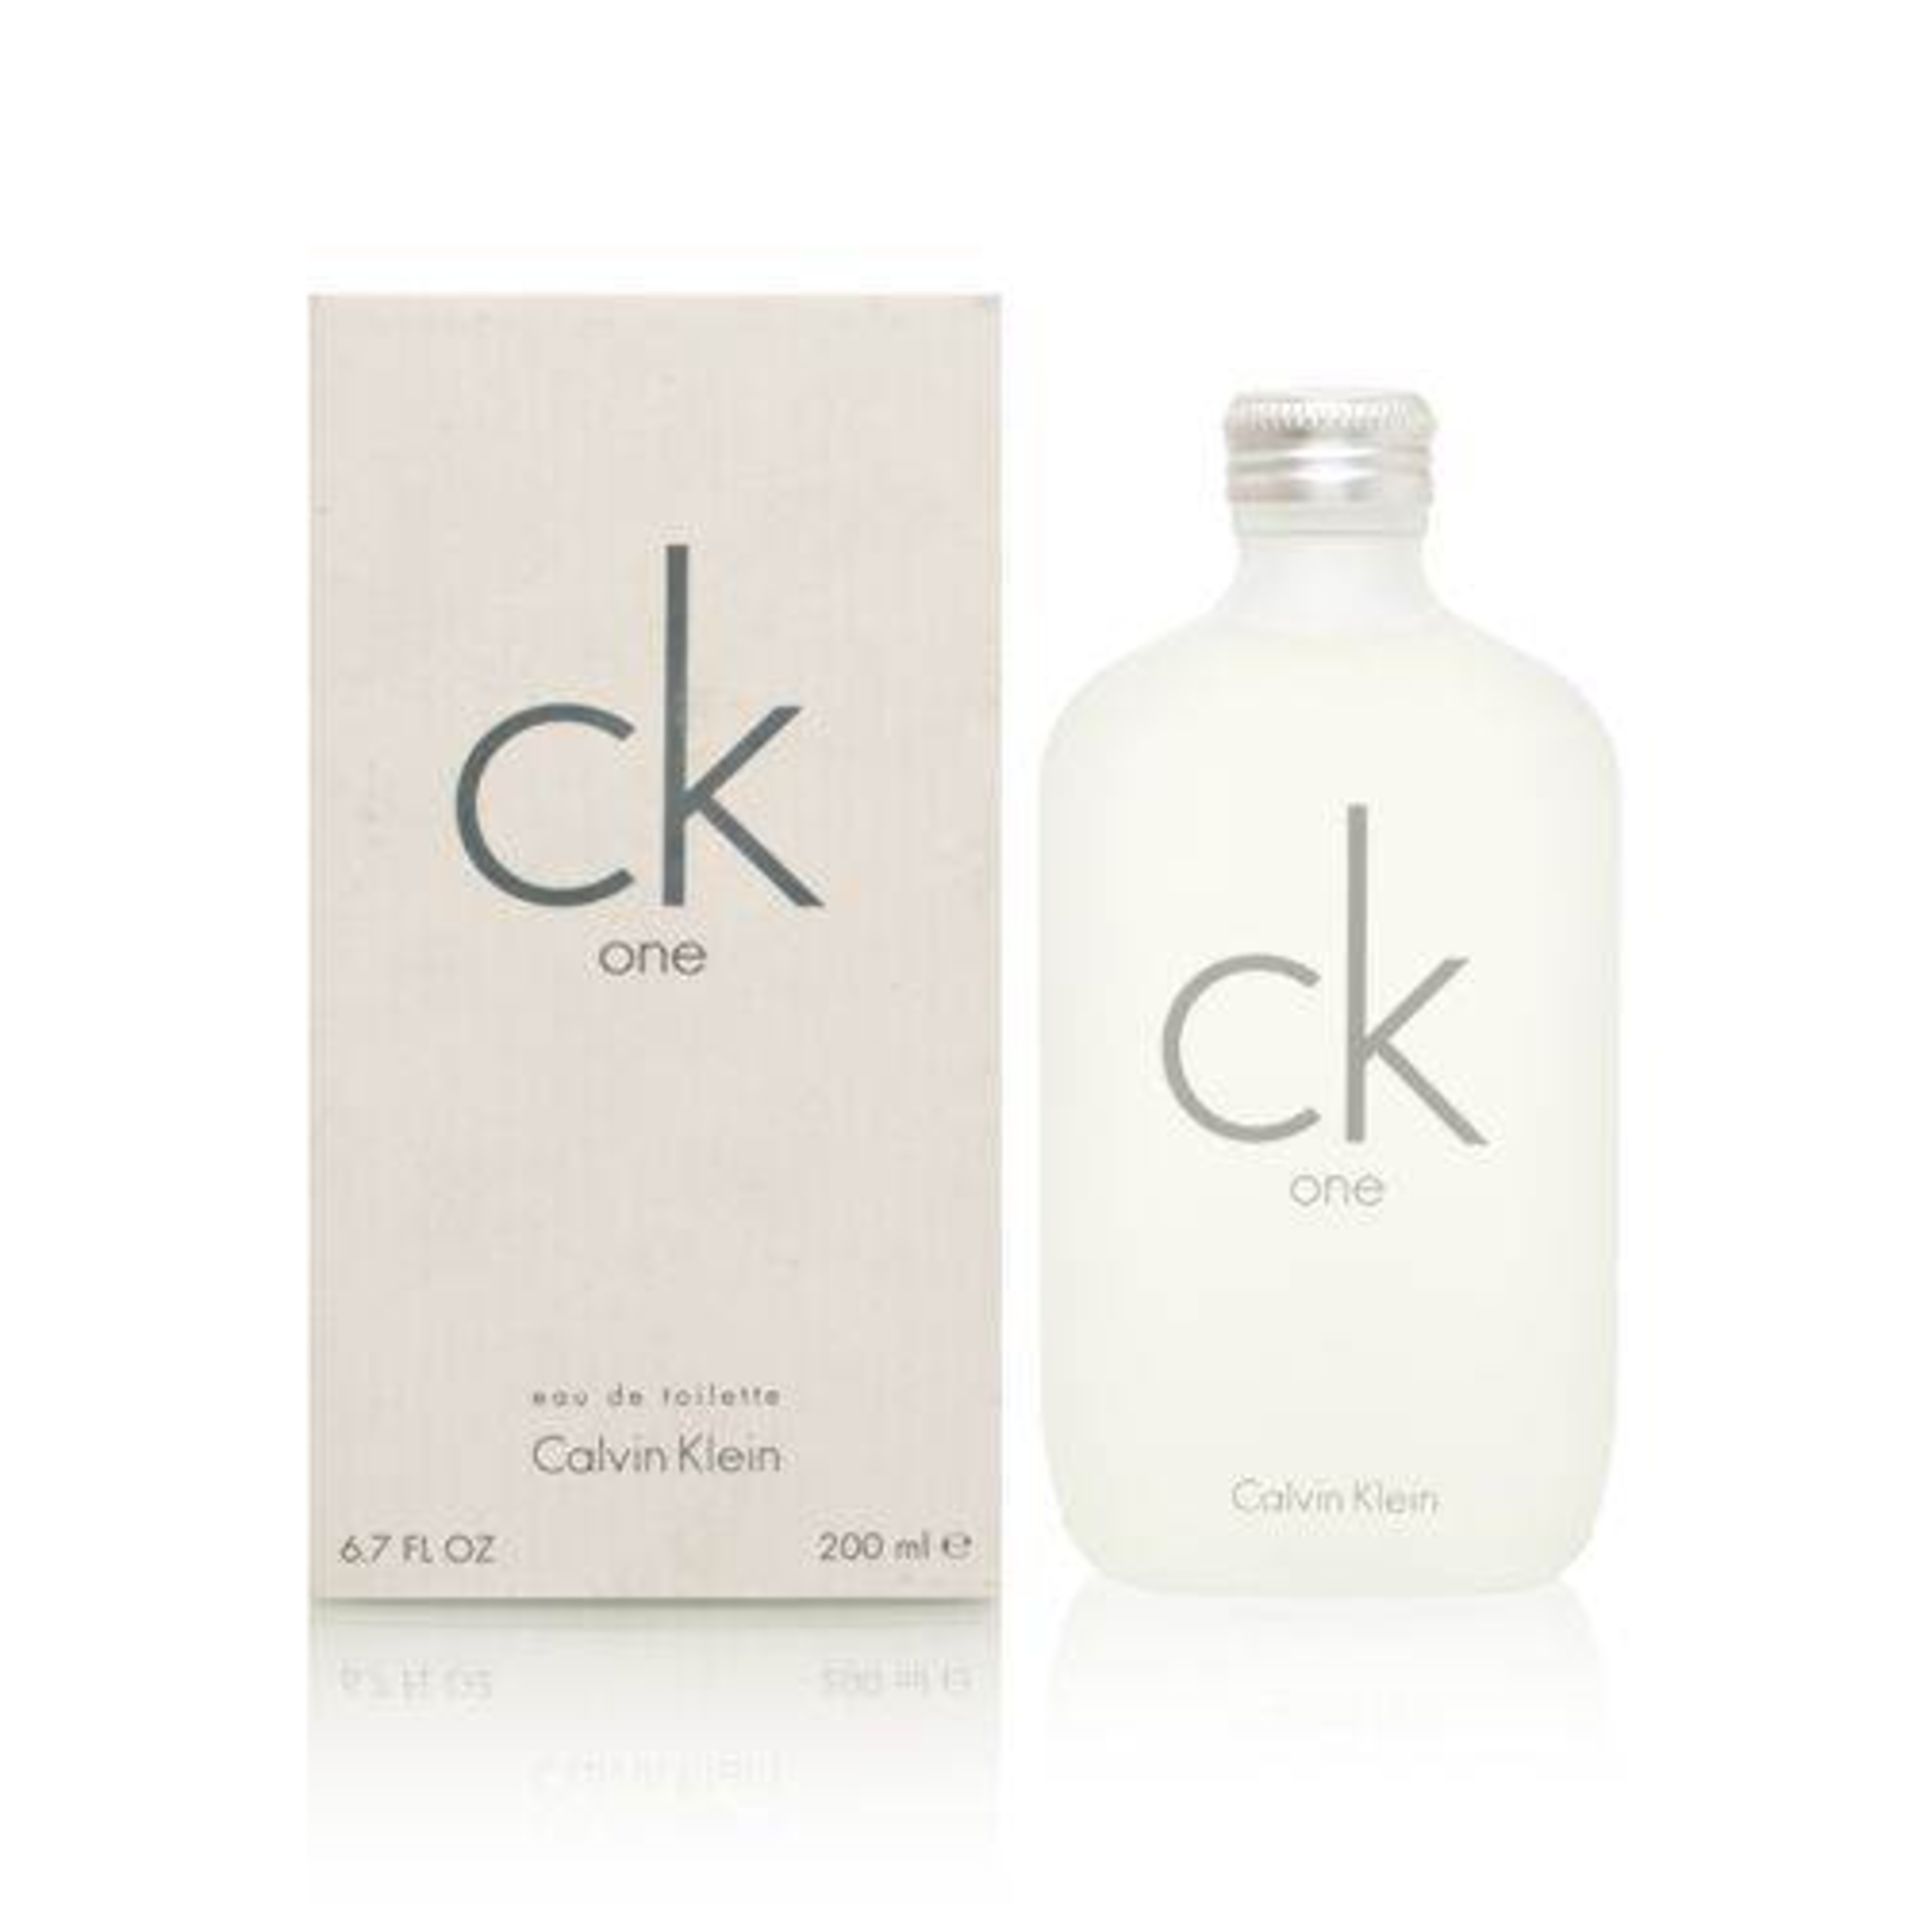 V Brand New CK One by Calvin Klein EDT Spray 200ml ISP Price £40.92 (yesstyle.co.uk) X 2 YOUR BID